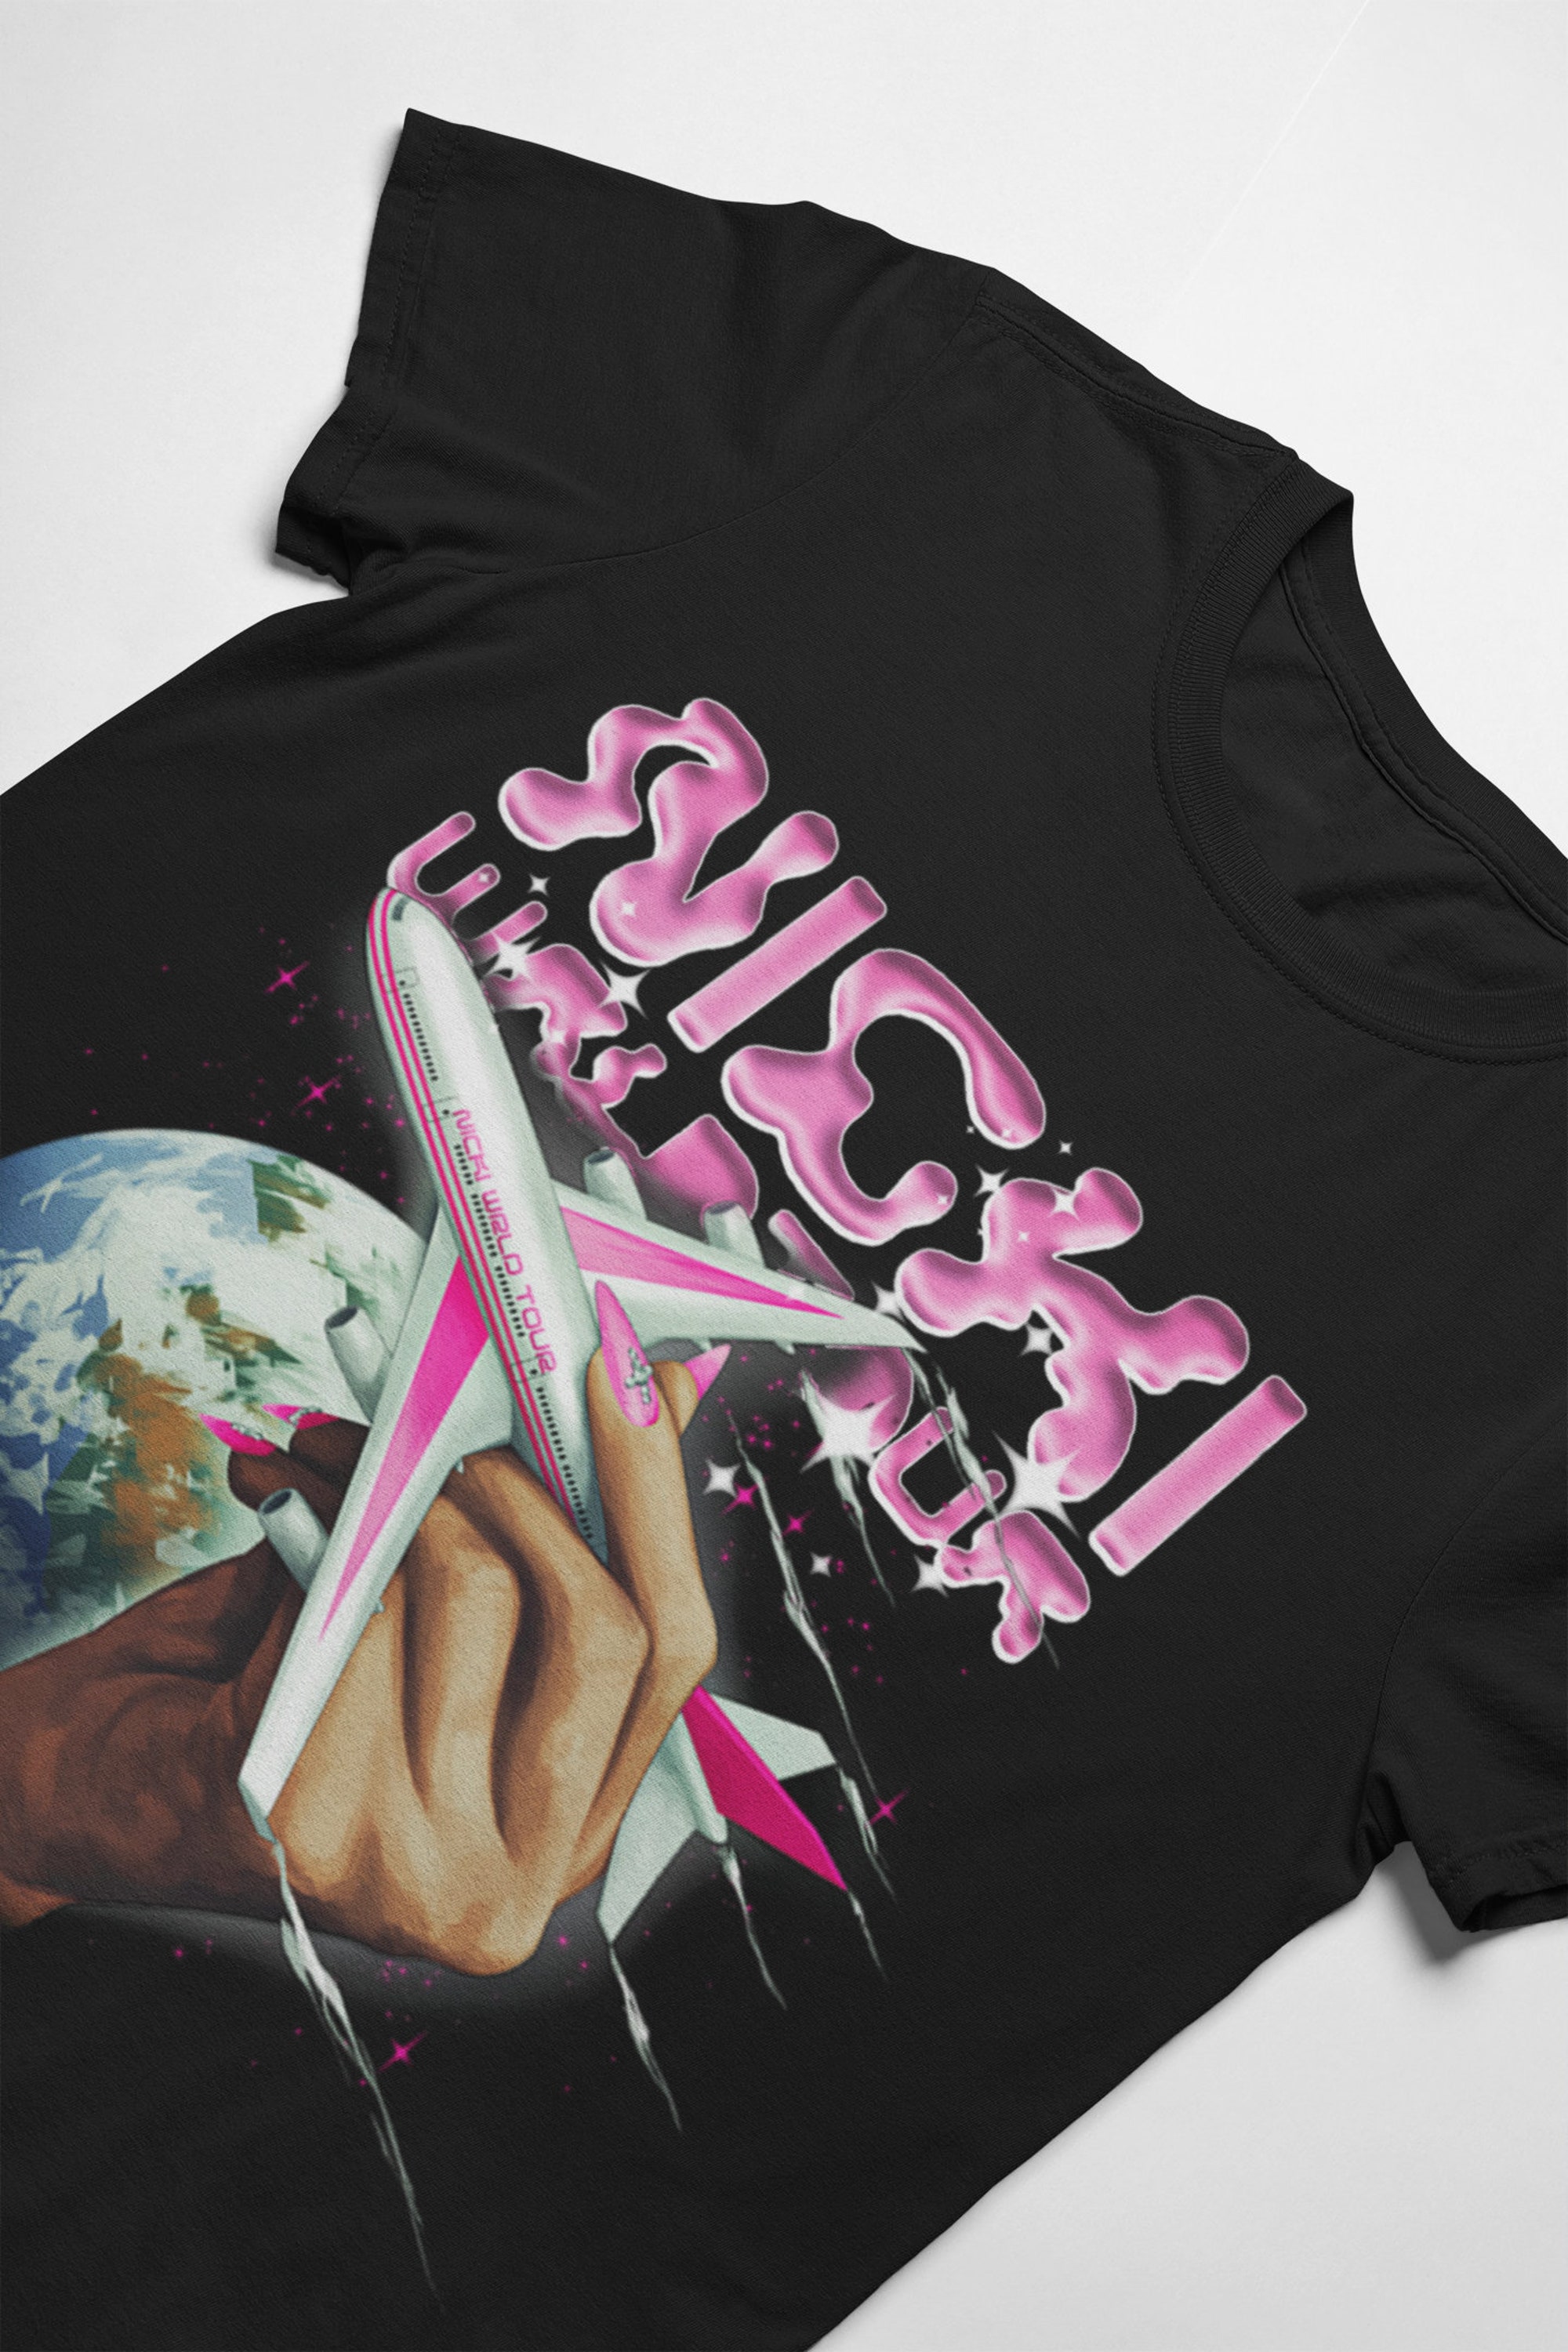 Vintage Graphic T-Shirt, Graphic Tee ~ Nicki Minaj, World Tour, Hip Hop